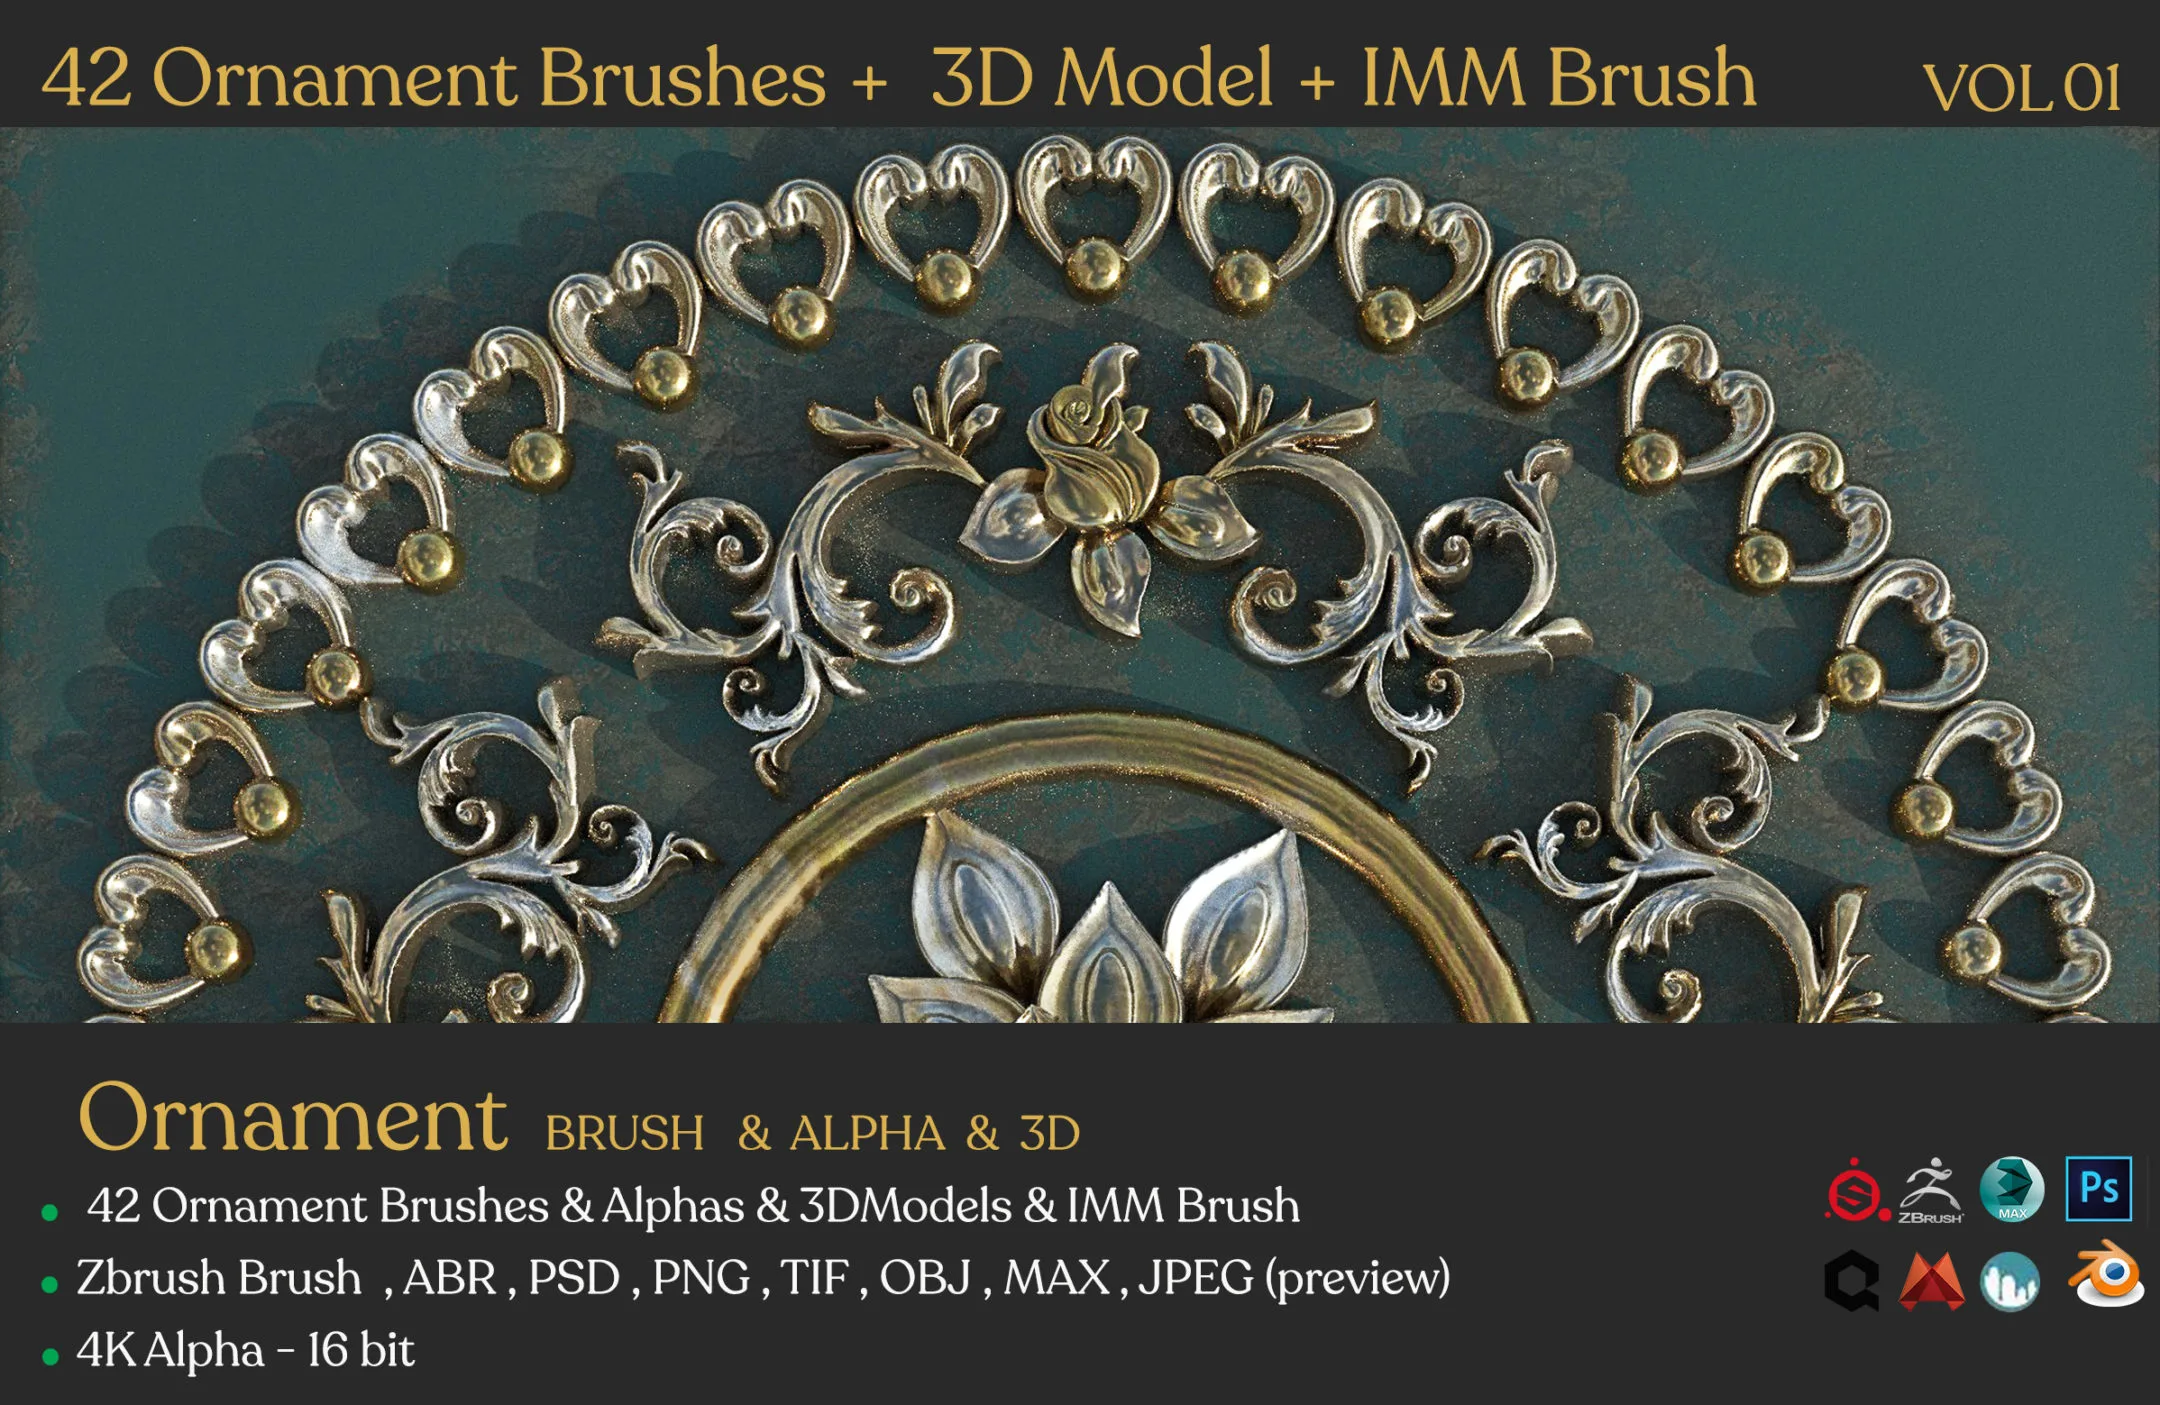 42 Ornament Brushes + 3D Model + IMM Brush Vol 01